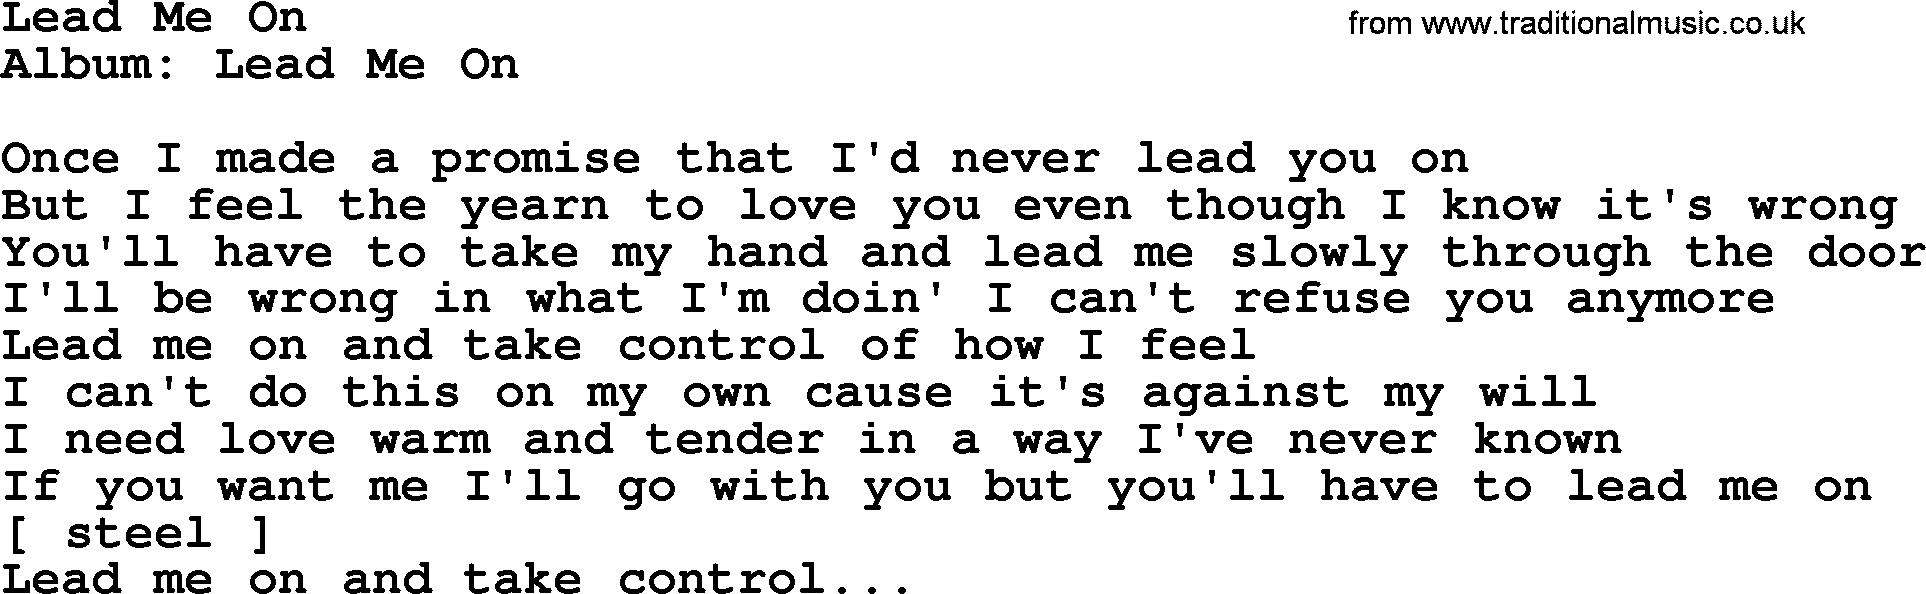 Loretta Lynn song: Lead Me On lyrics